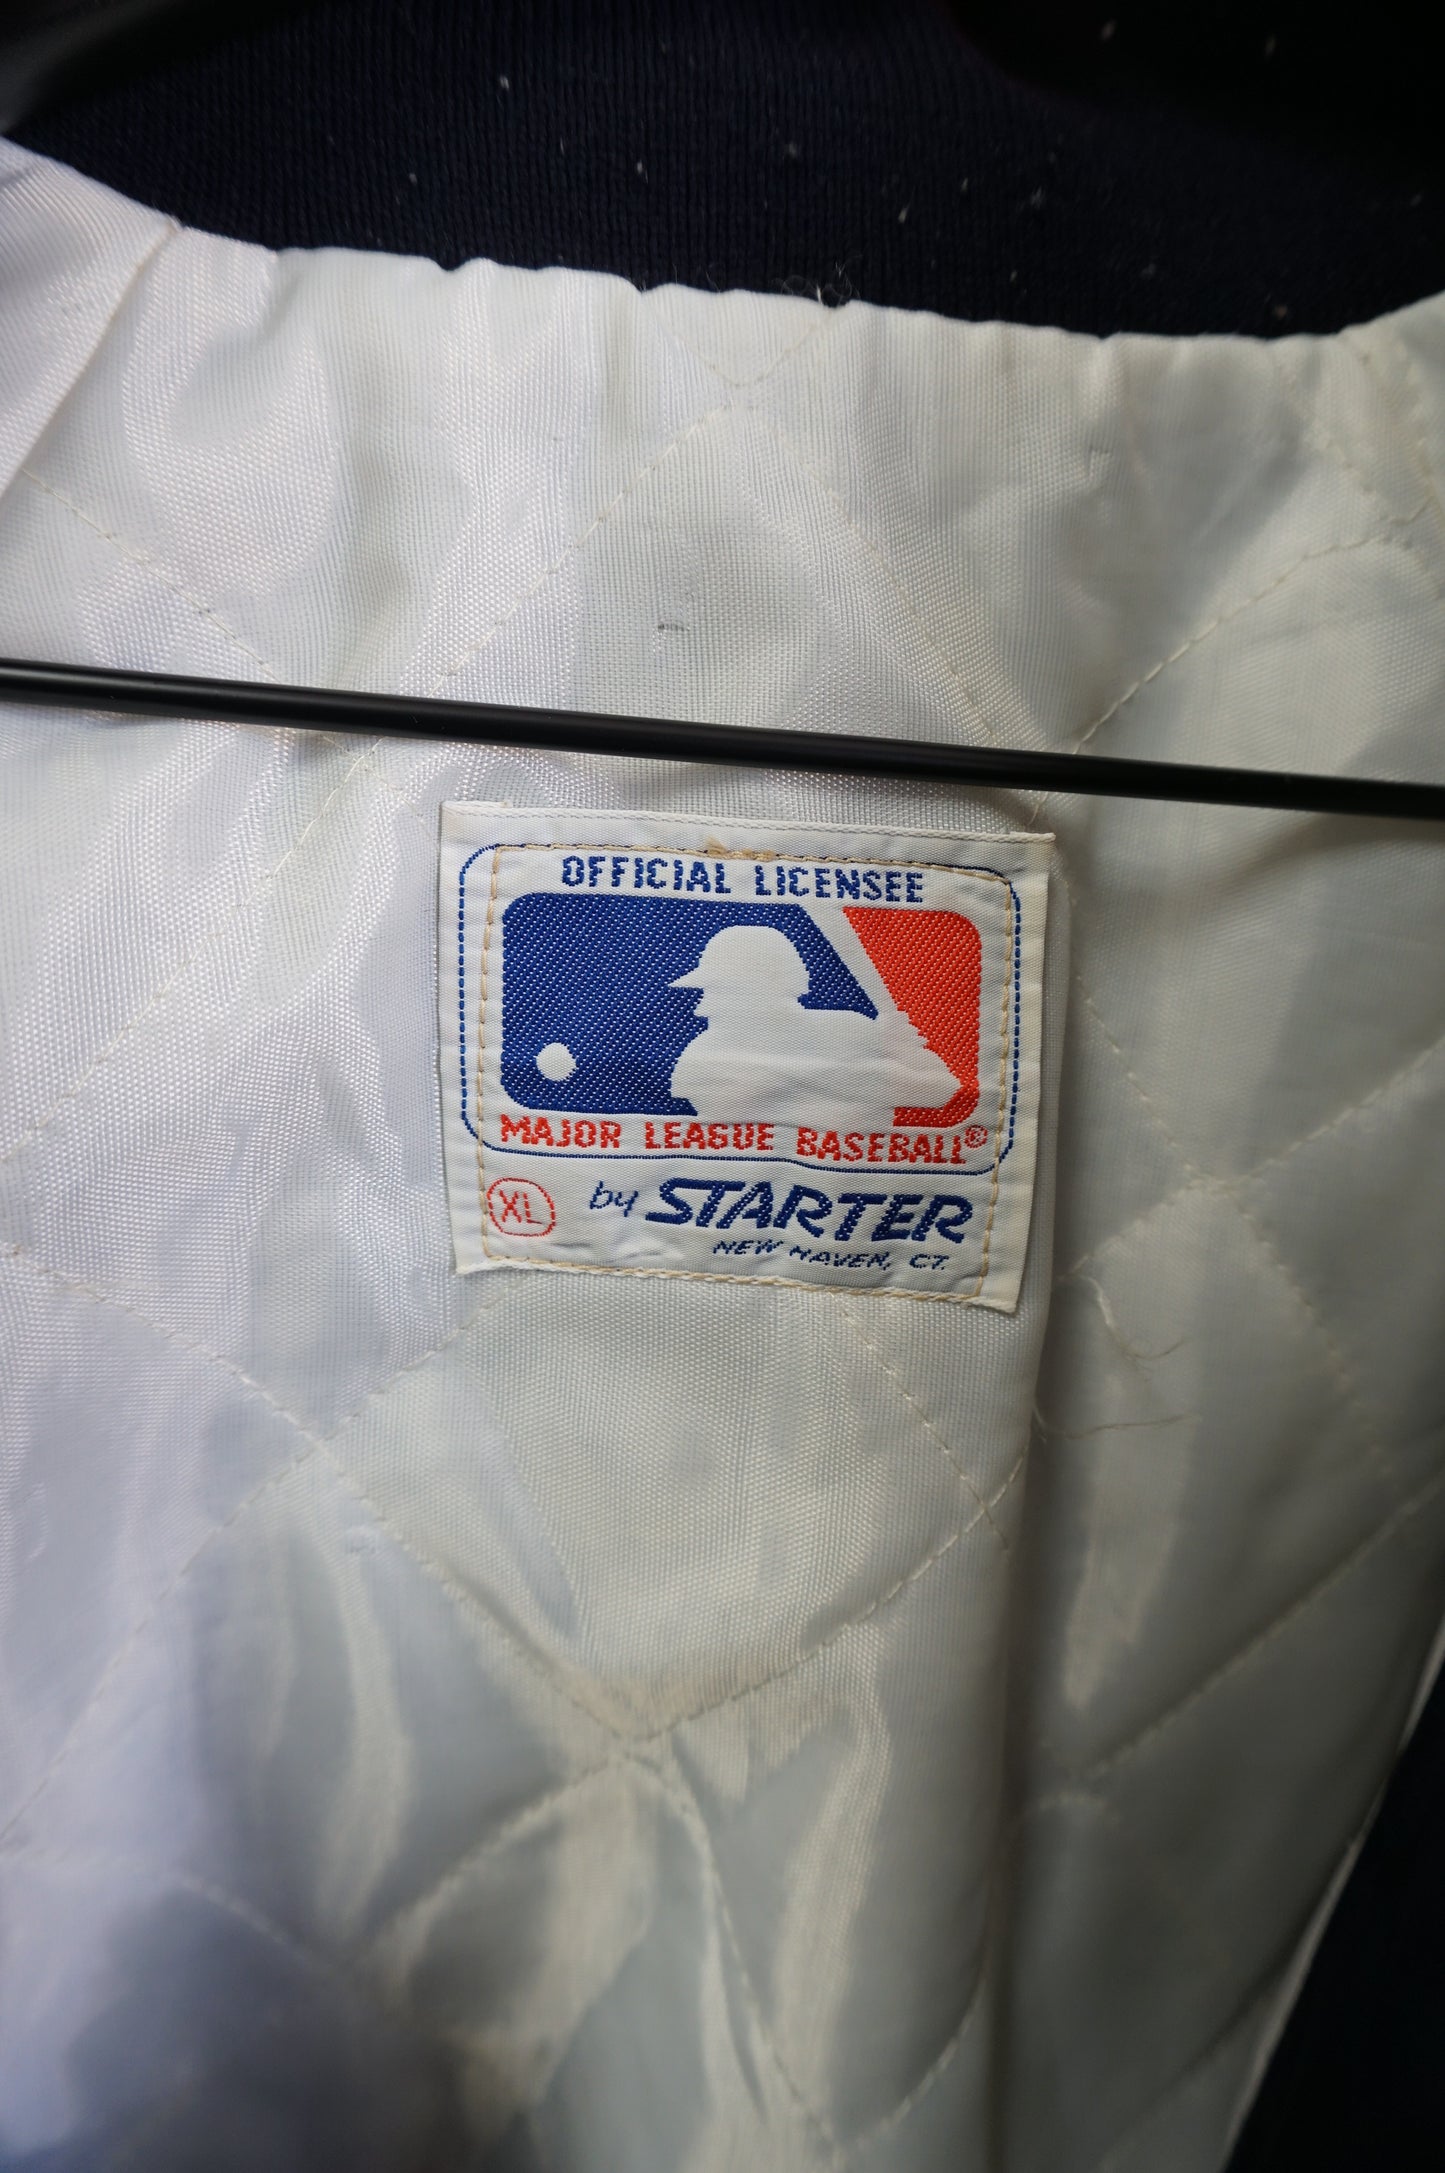 (XL) Vtg New York Yankees Starter Satin Jacket